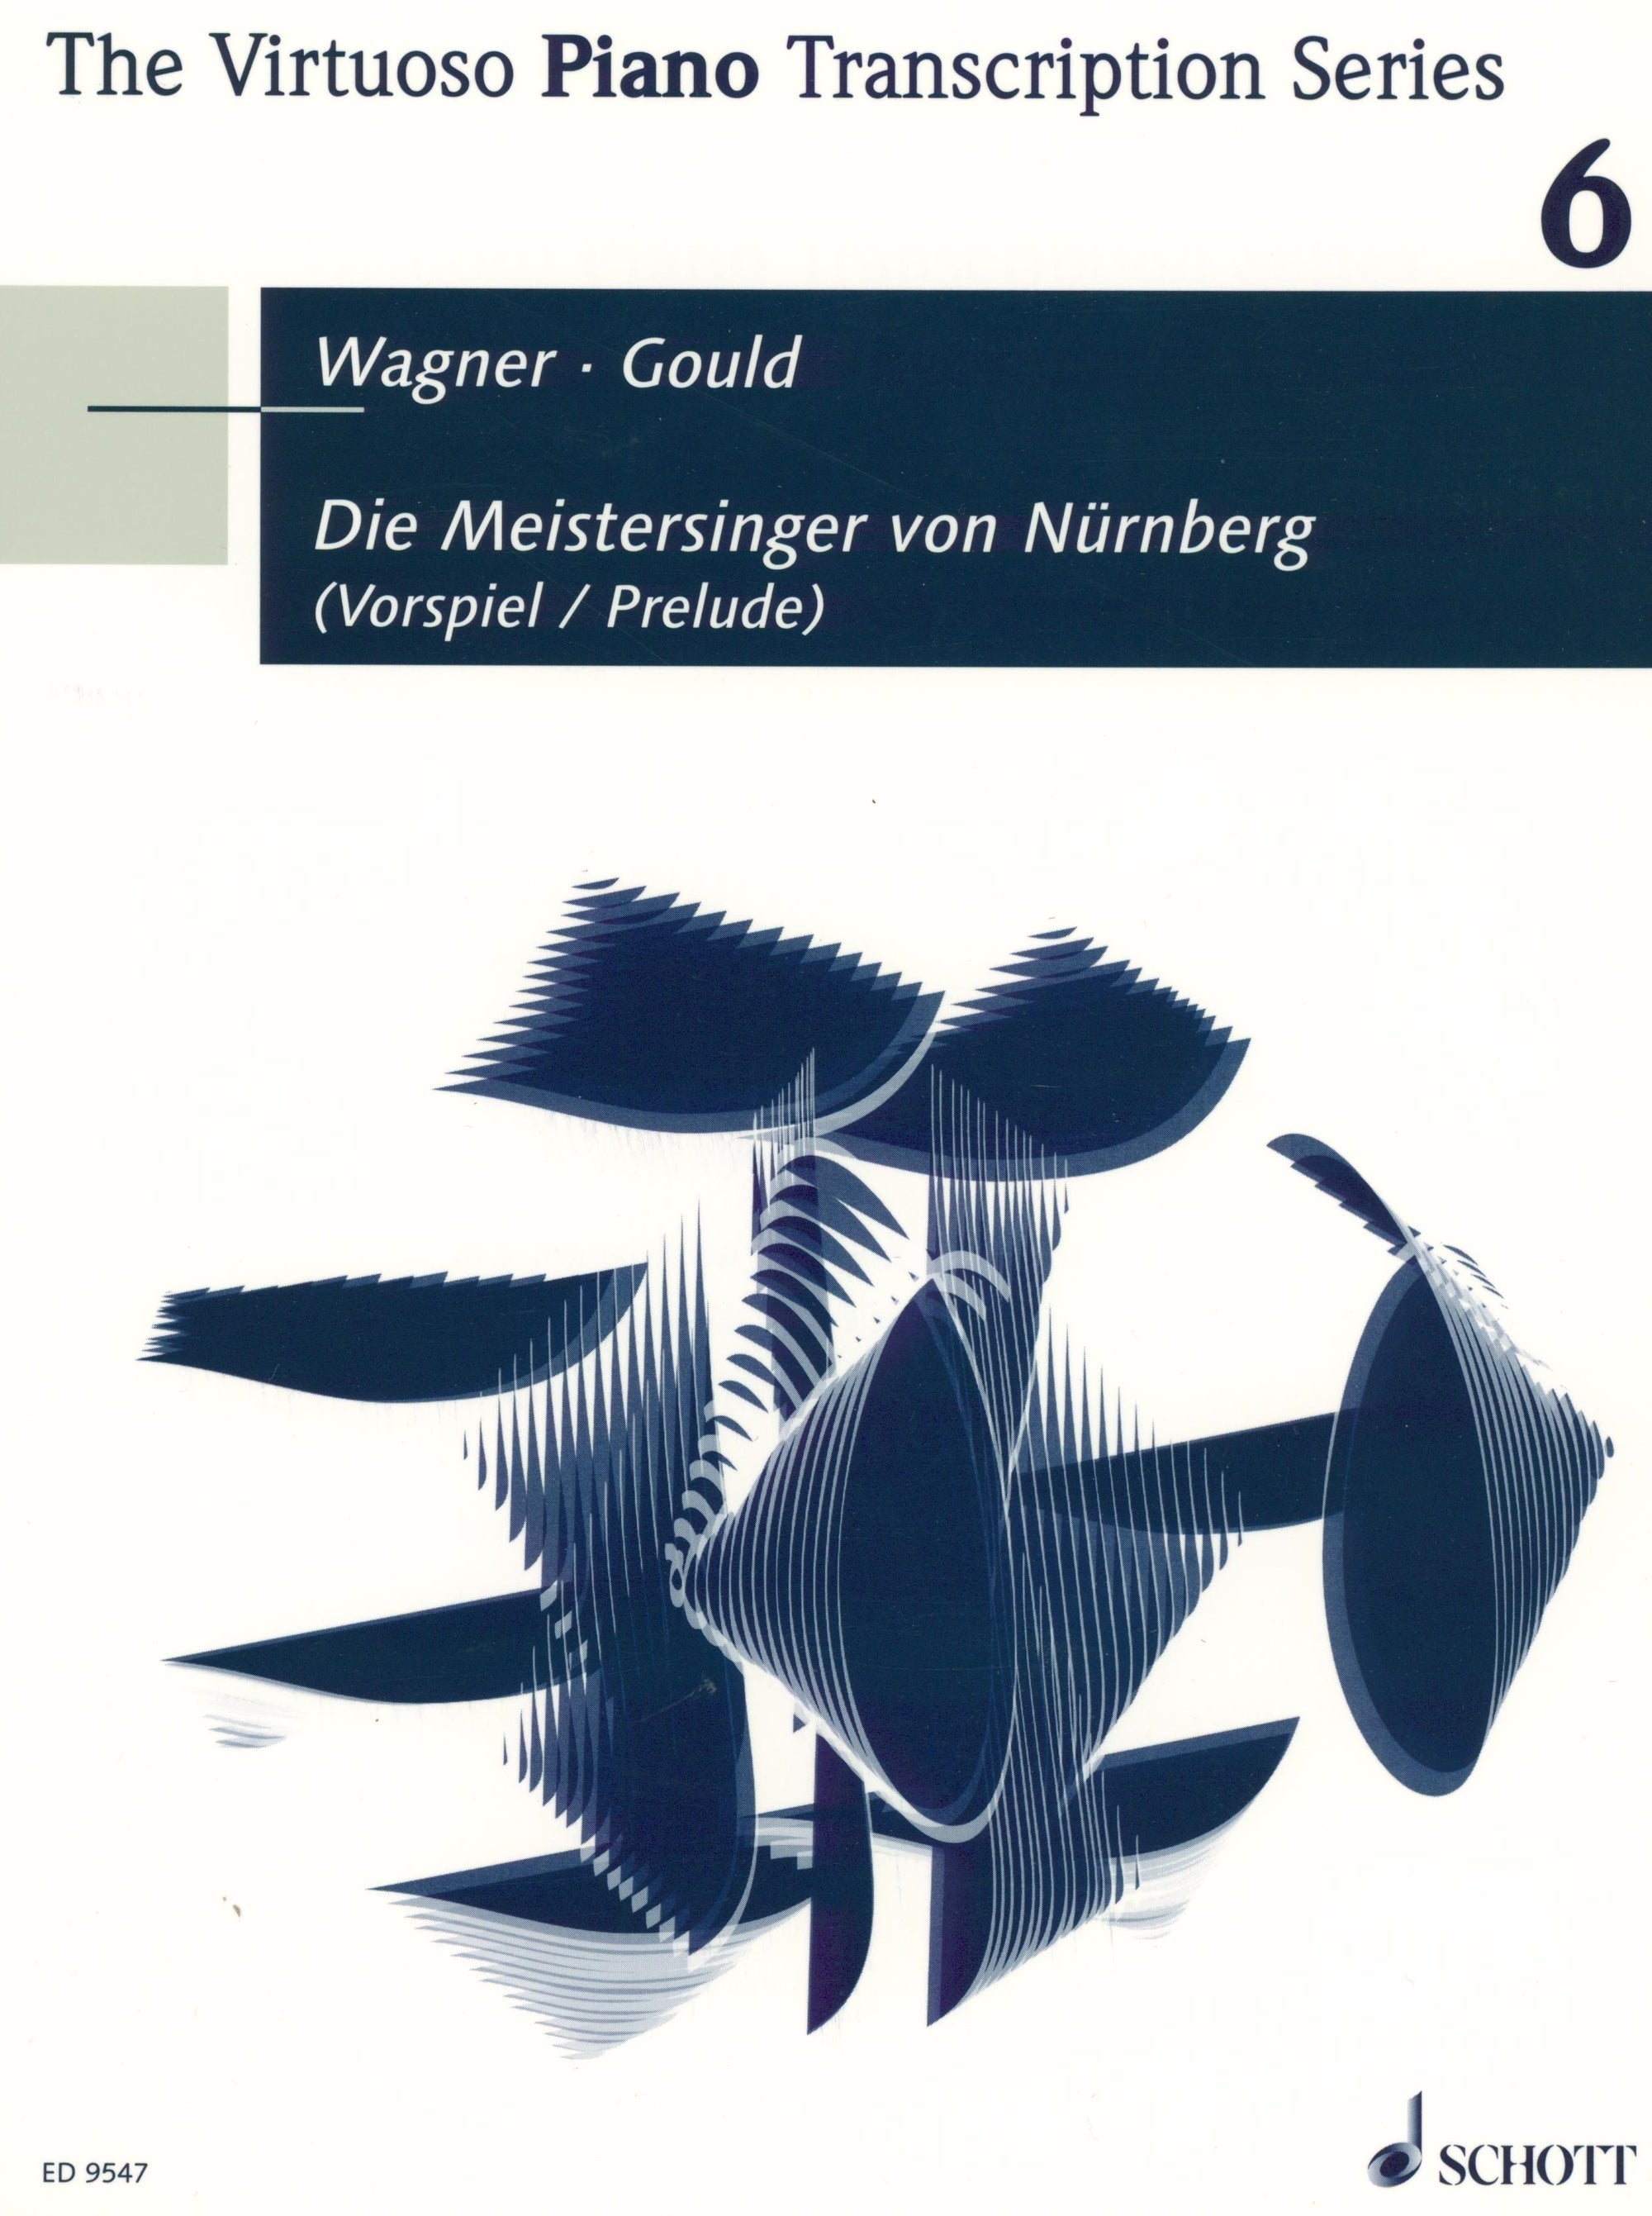 Wagner-Gould: Prelude to Die Meistersinger von Nürnberg